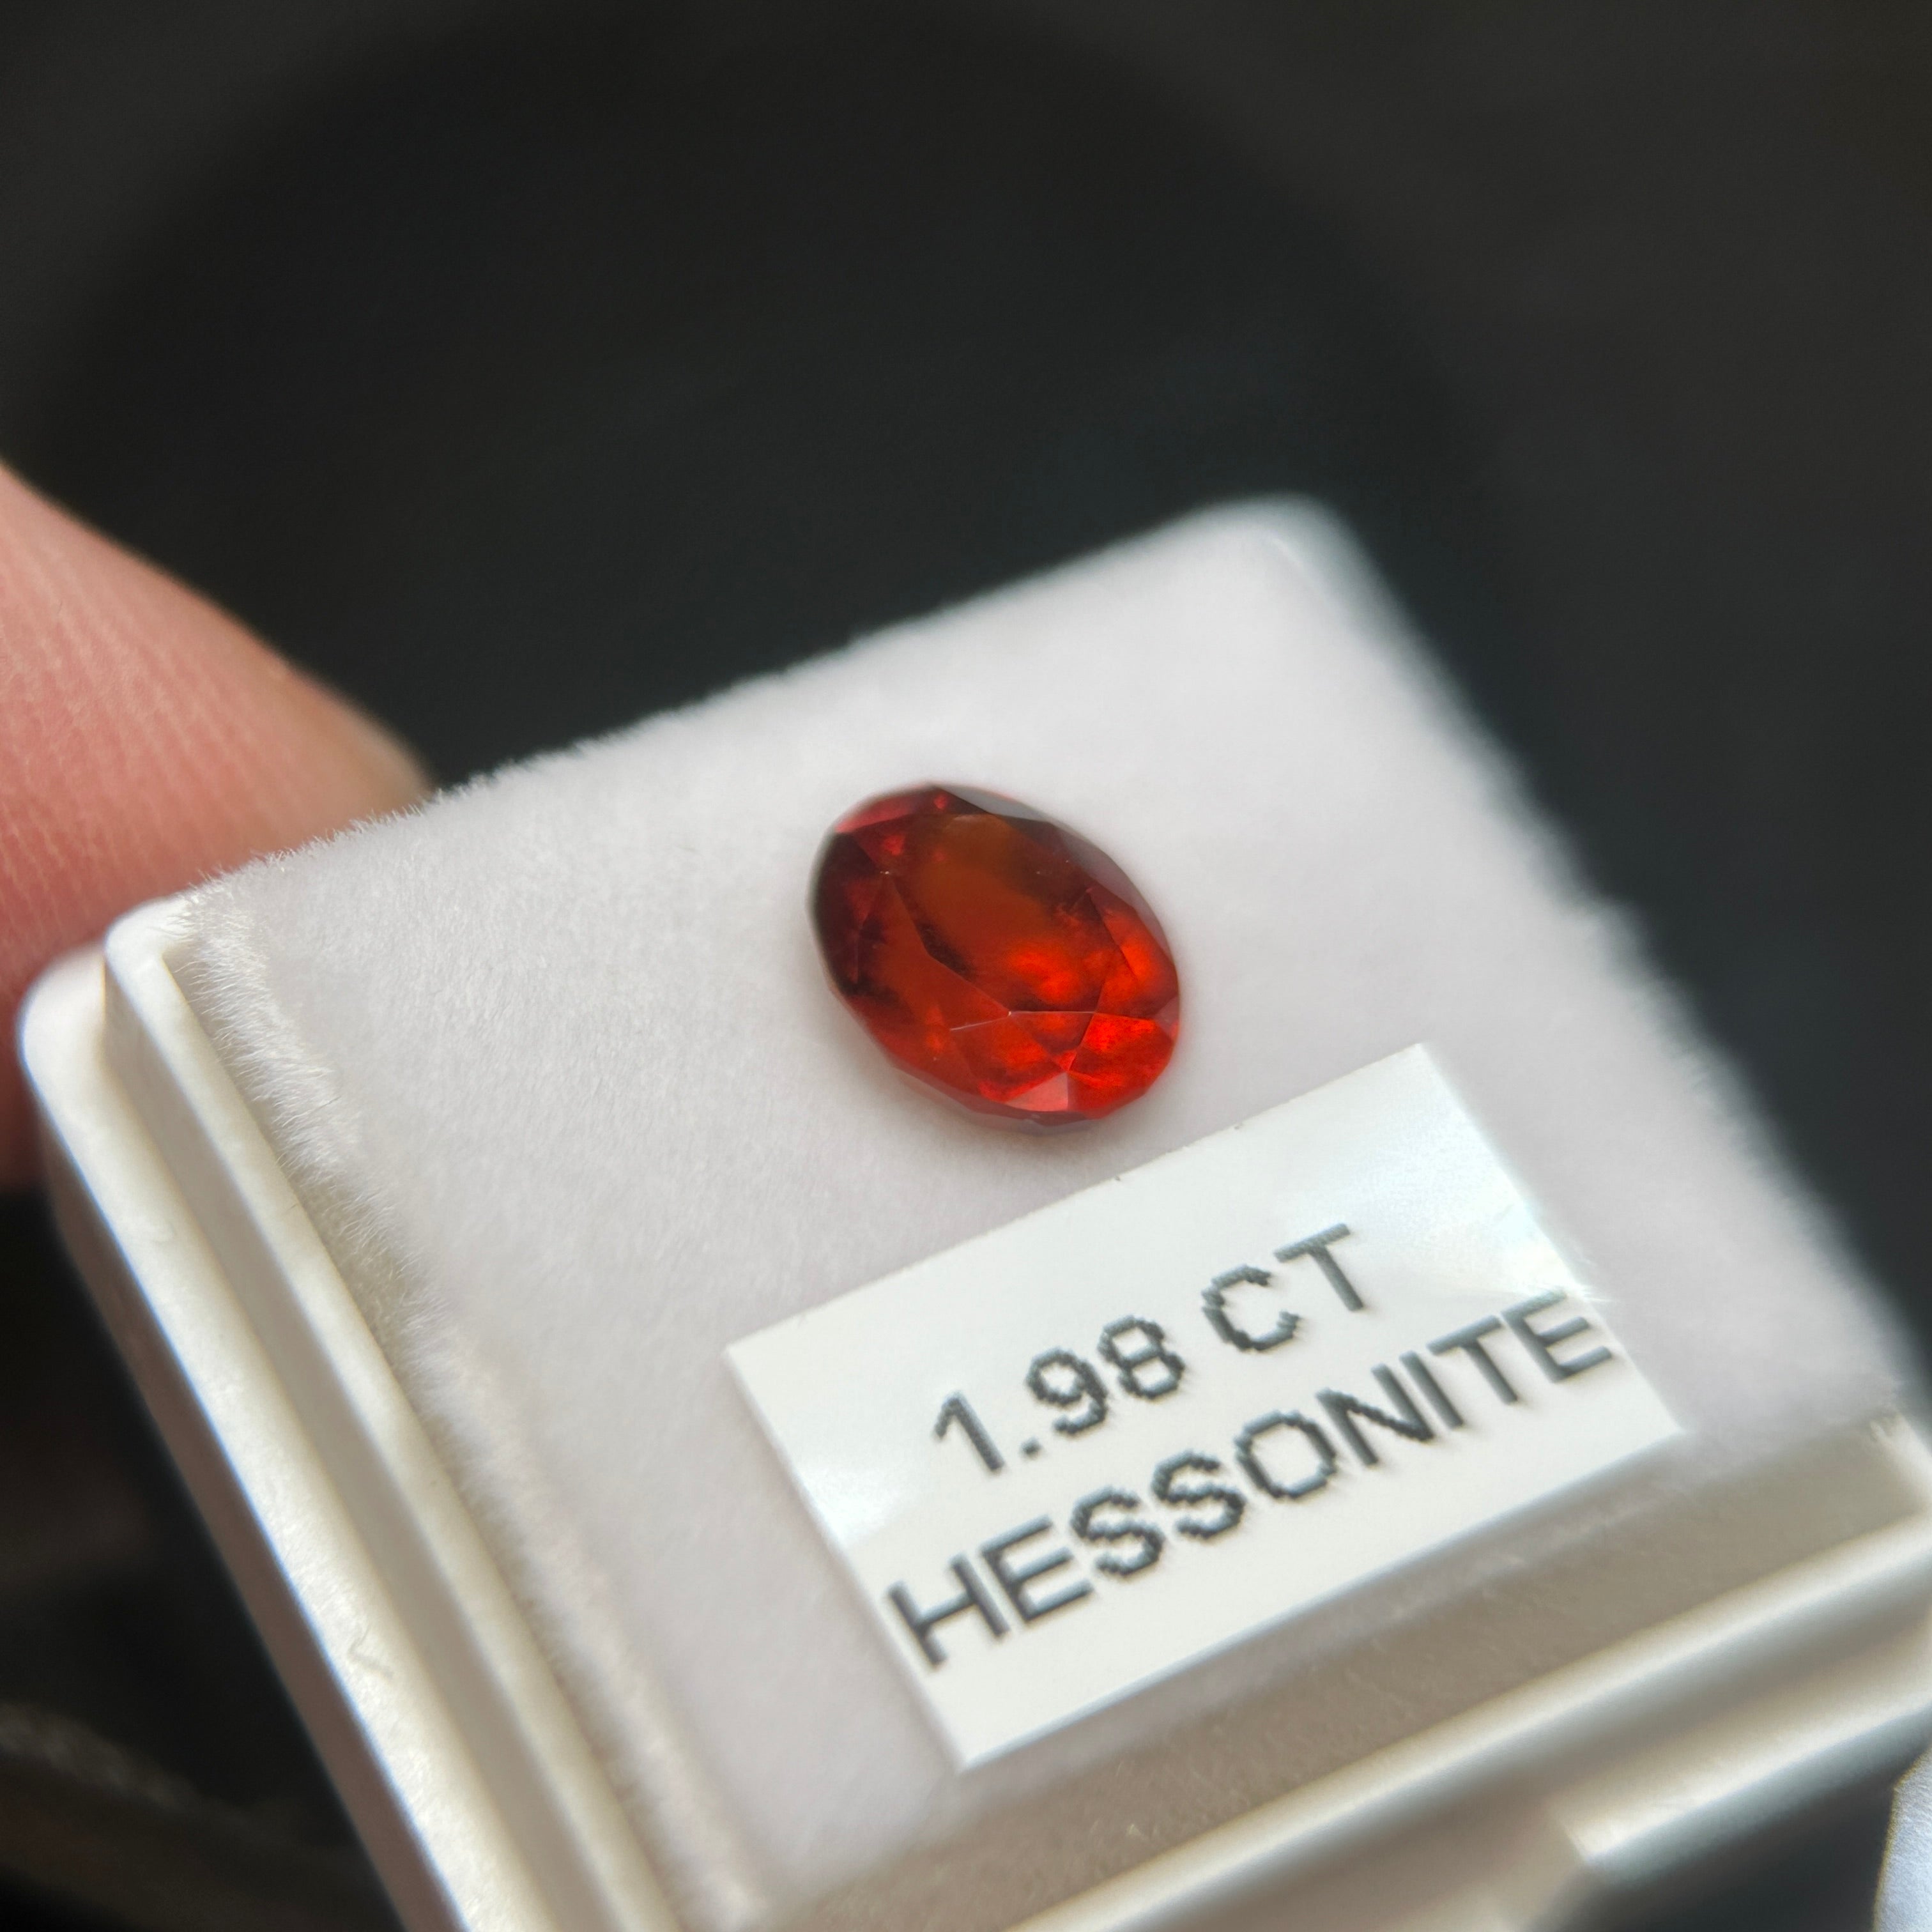 1.98ct Hessonite, Tanzania, Untreated Unheated